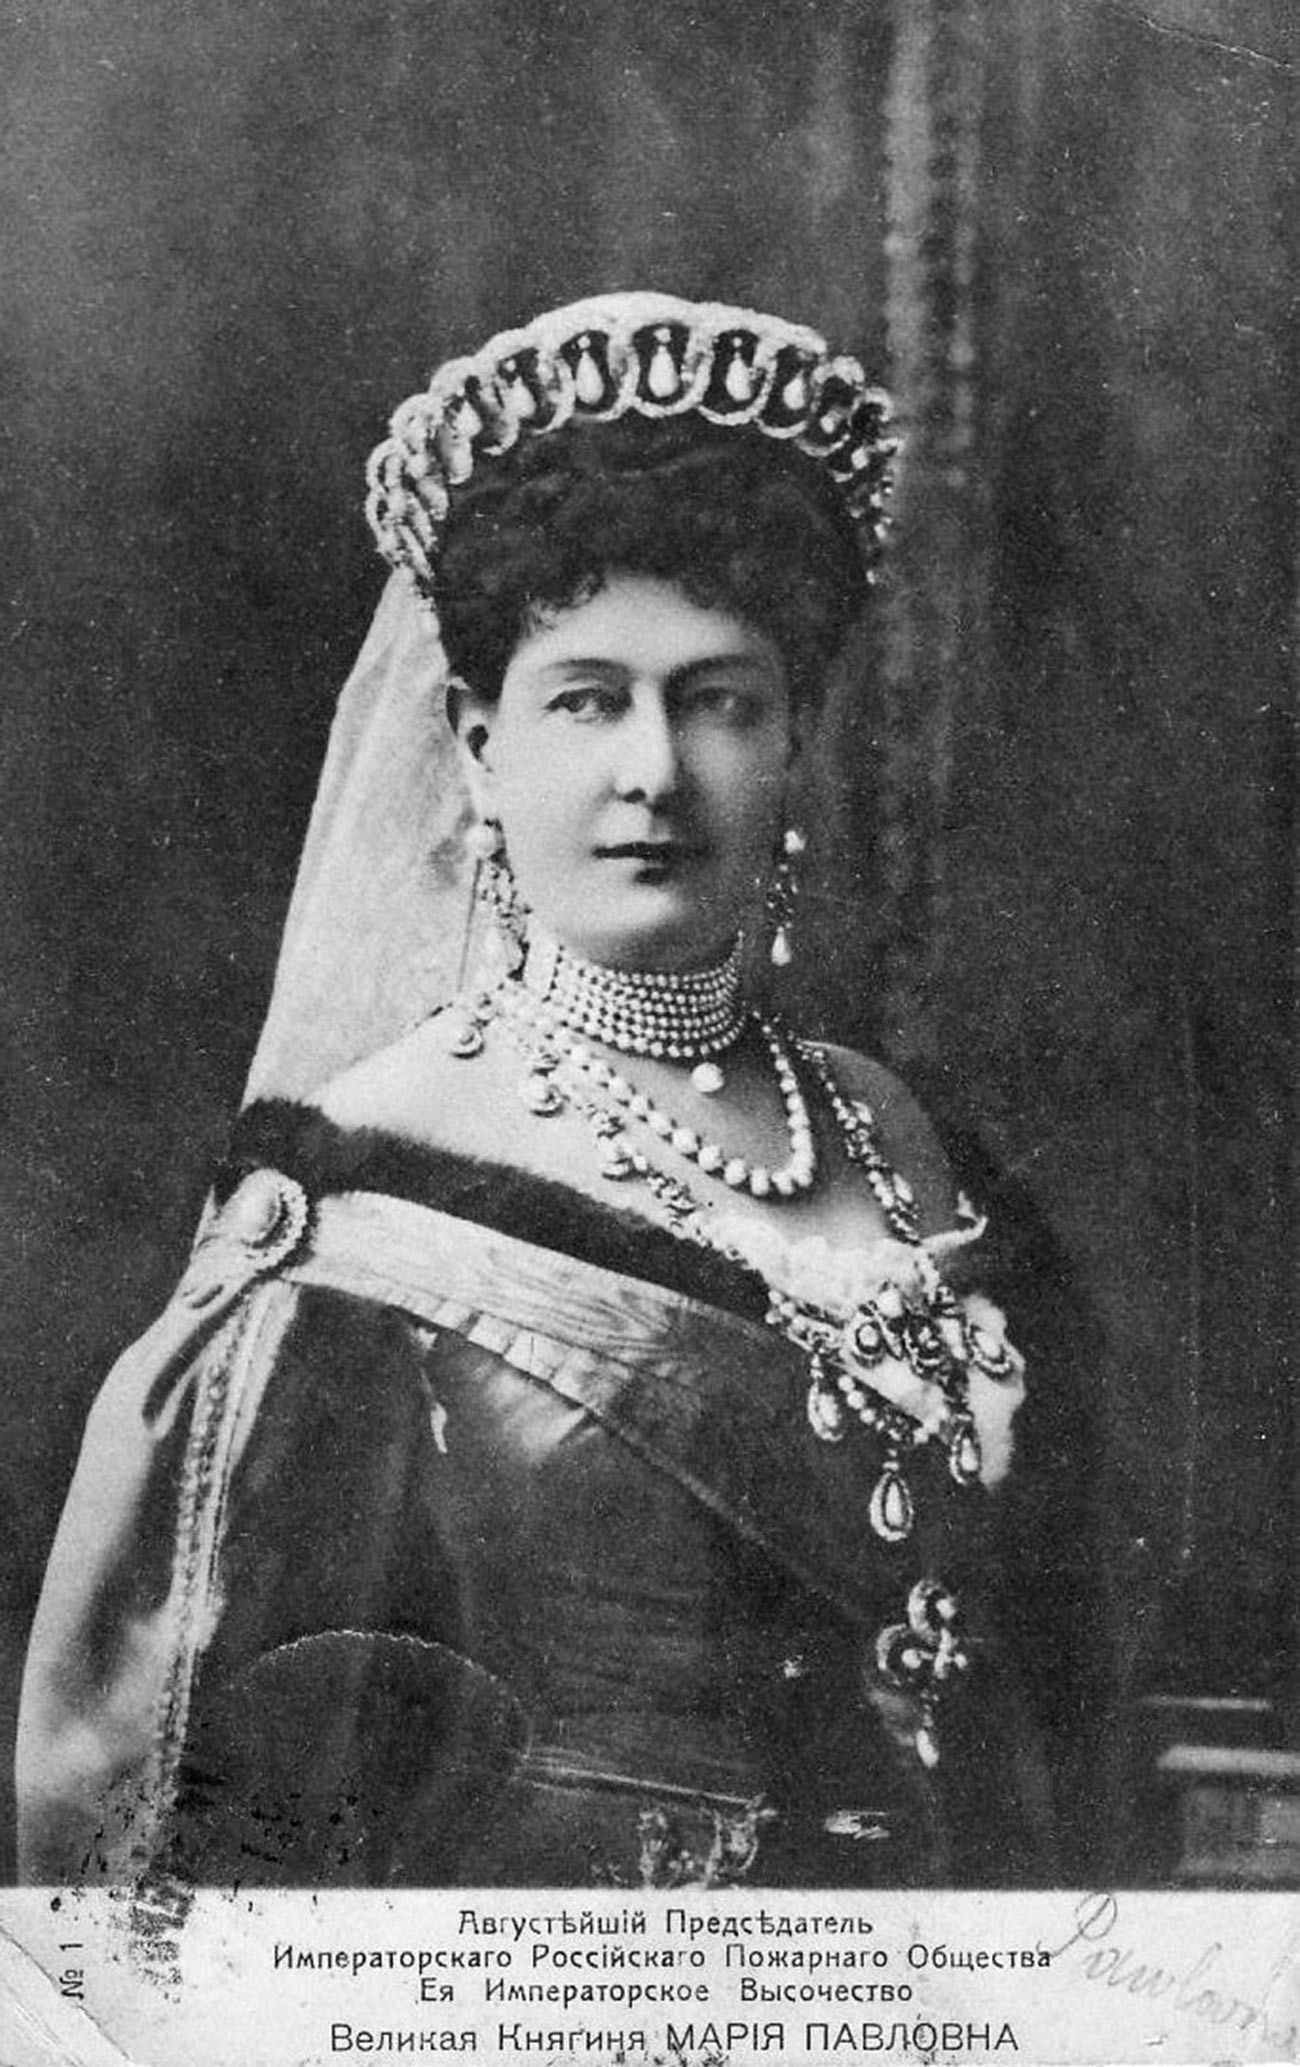 Maria Pavlovna in her famous tiara.